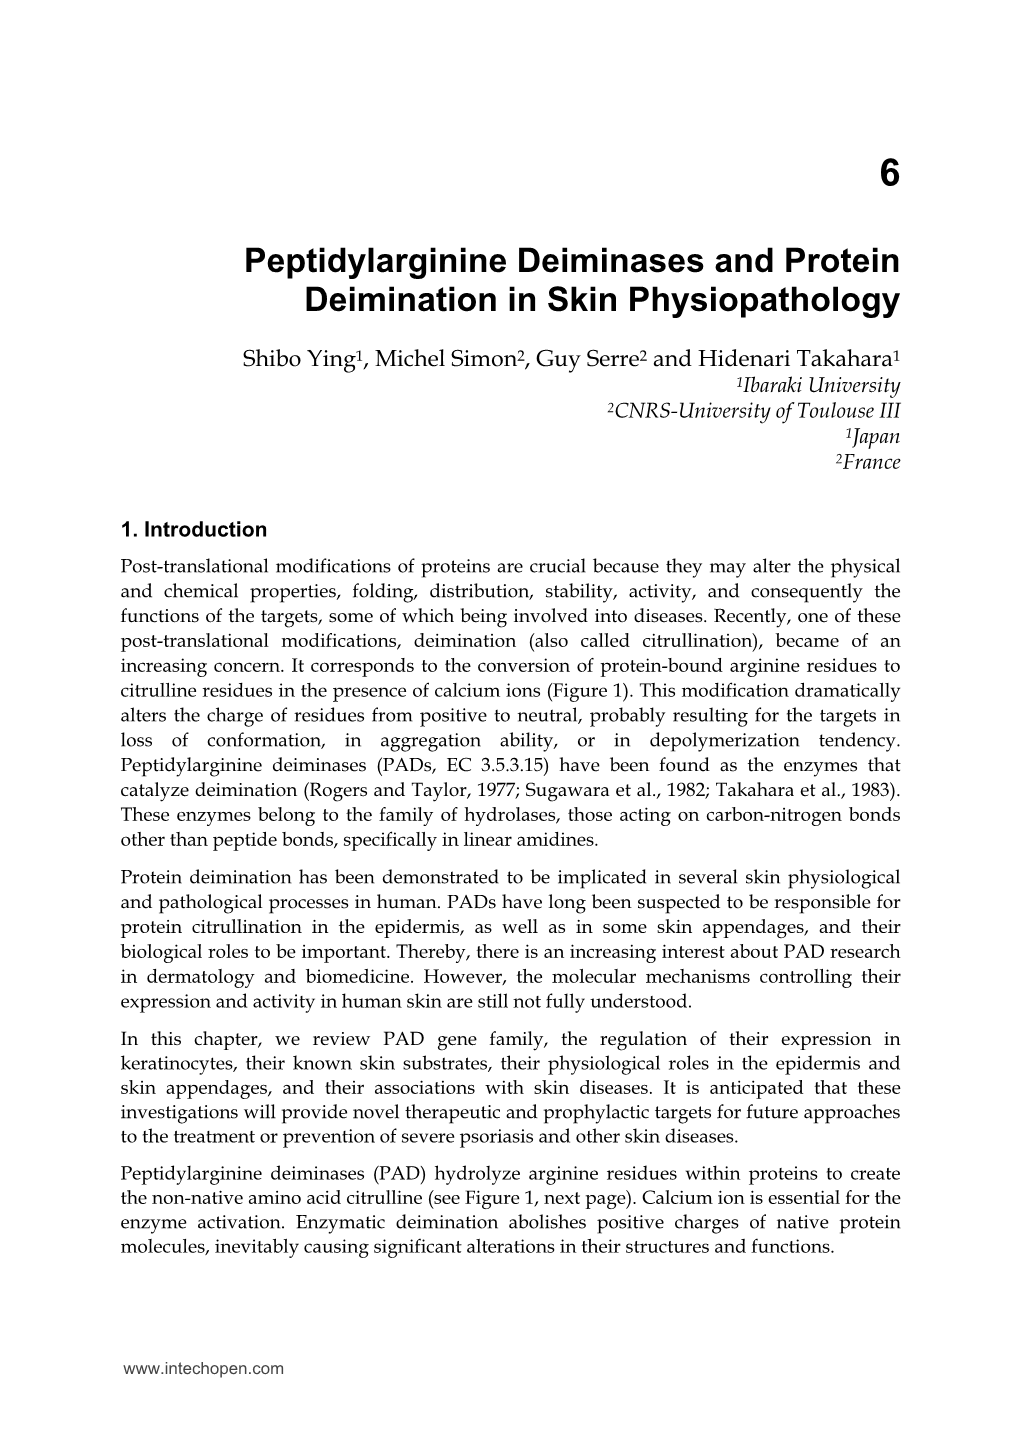 Peptidylarginine Deiminases and Protein Deimination in Skin Physiopathology